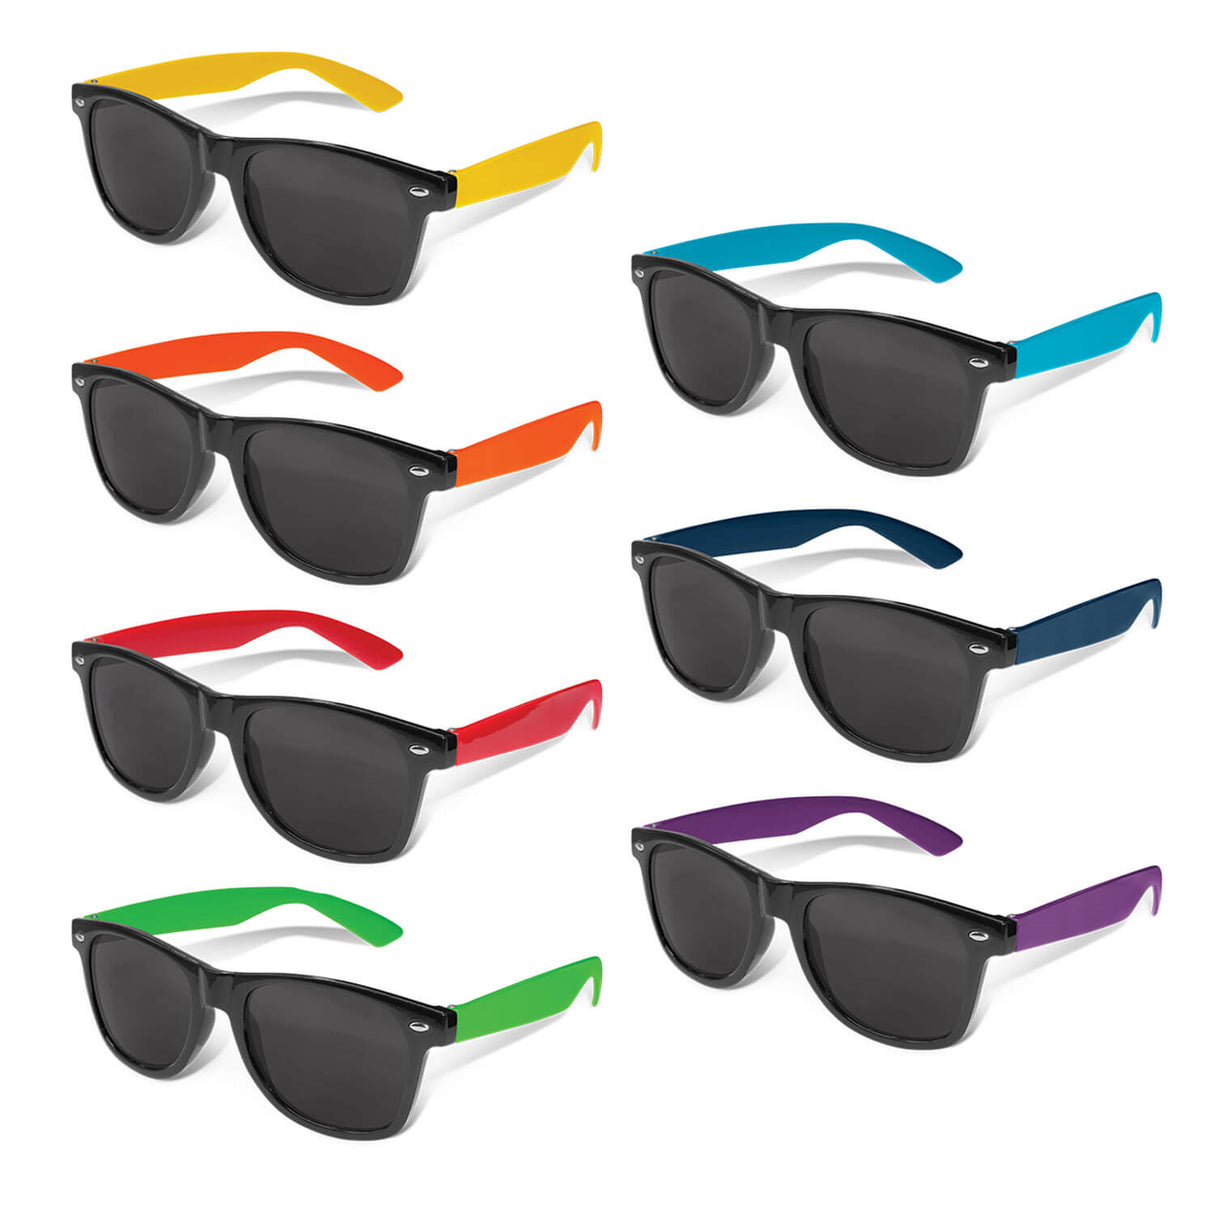 Malibu Premium Sunglasses With Black Frame - Printed